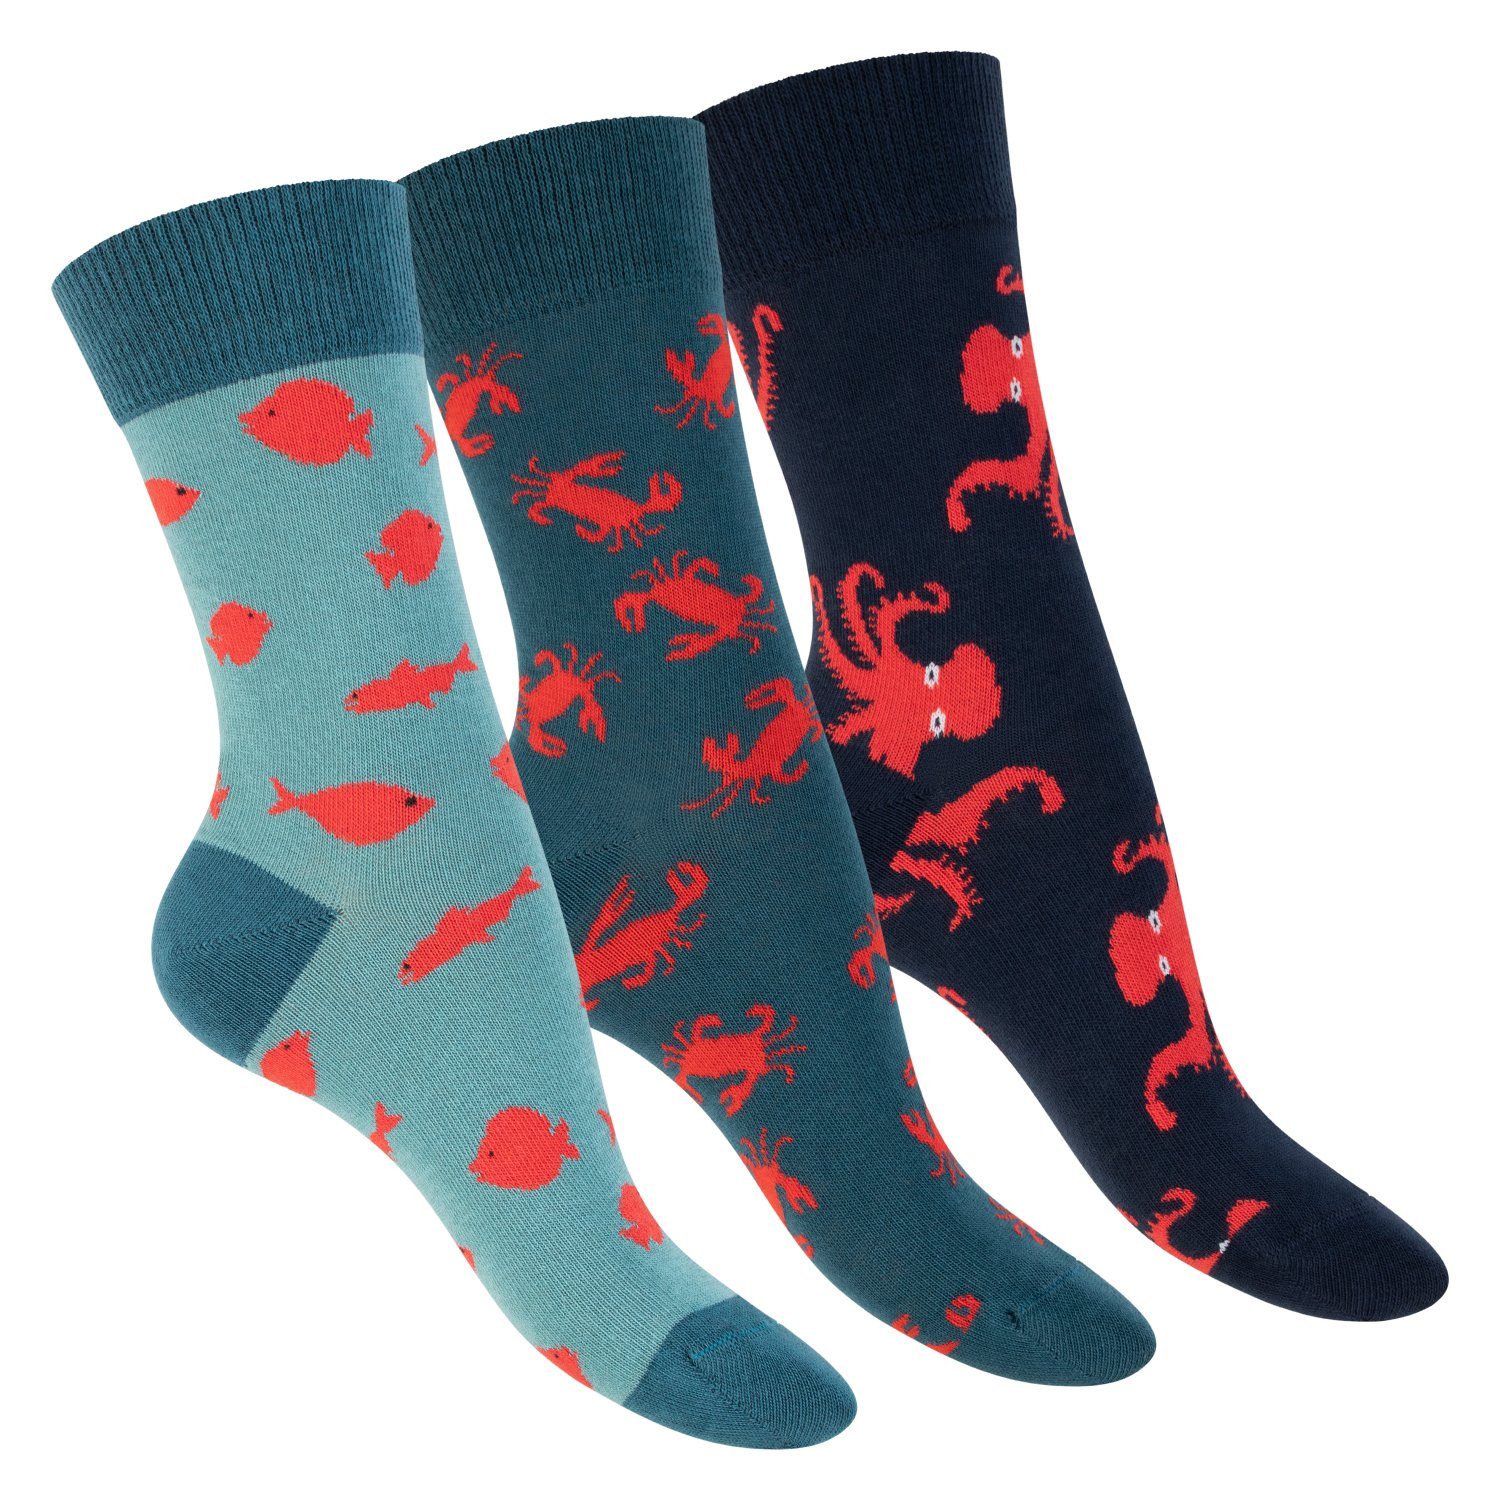 Footstar Basicsocken Damen/Herren Ocean Socken, Baumwollsocken Motiv Modische Bunte